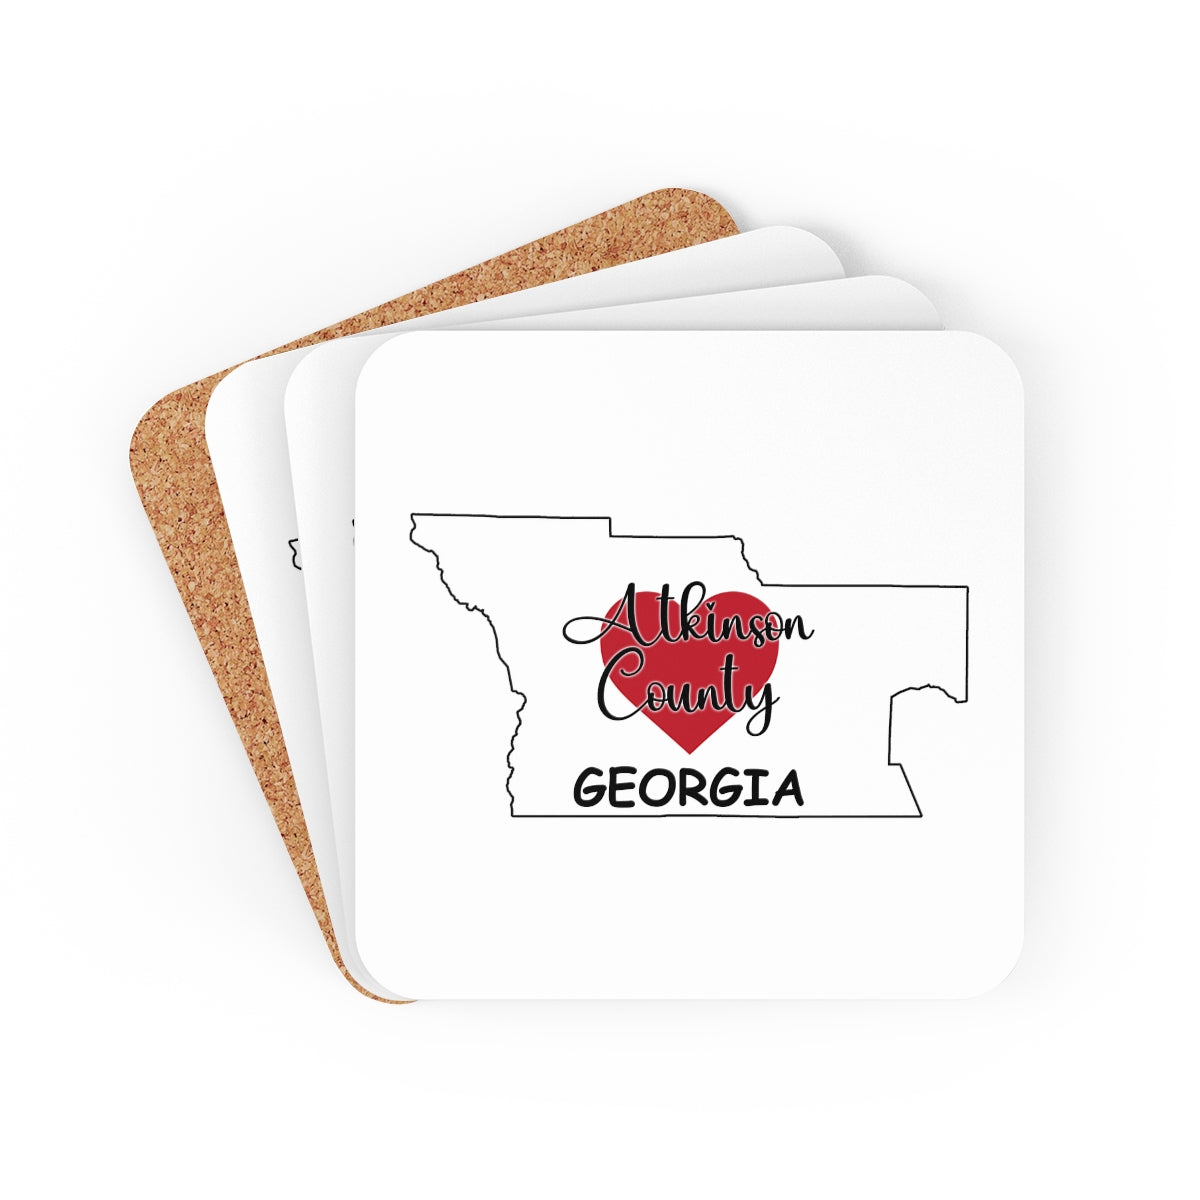 Atkinson County Georgia Corkwood Coaster Set